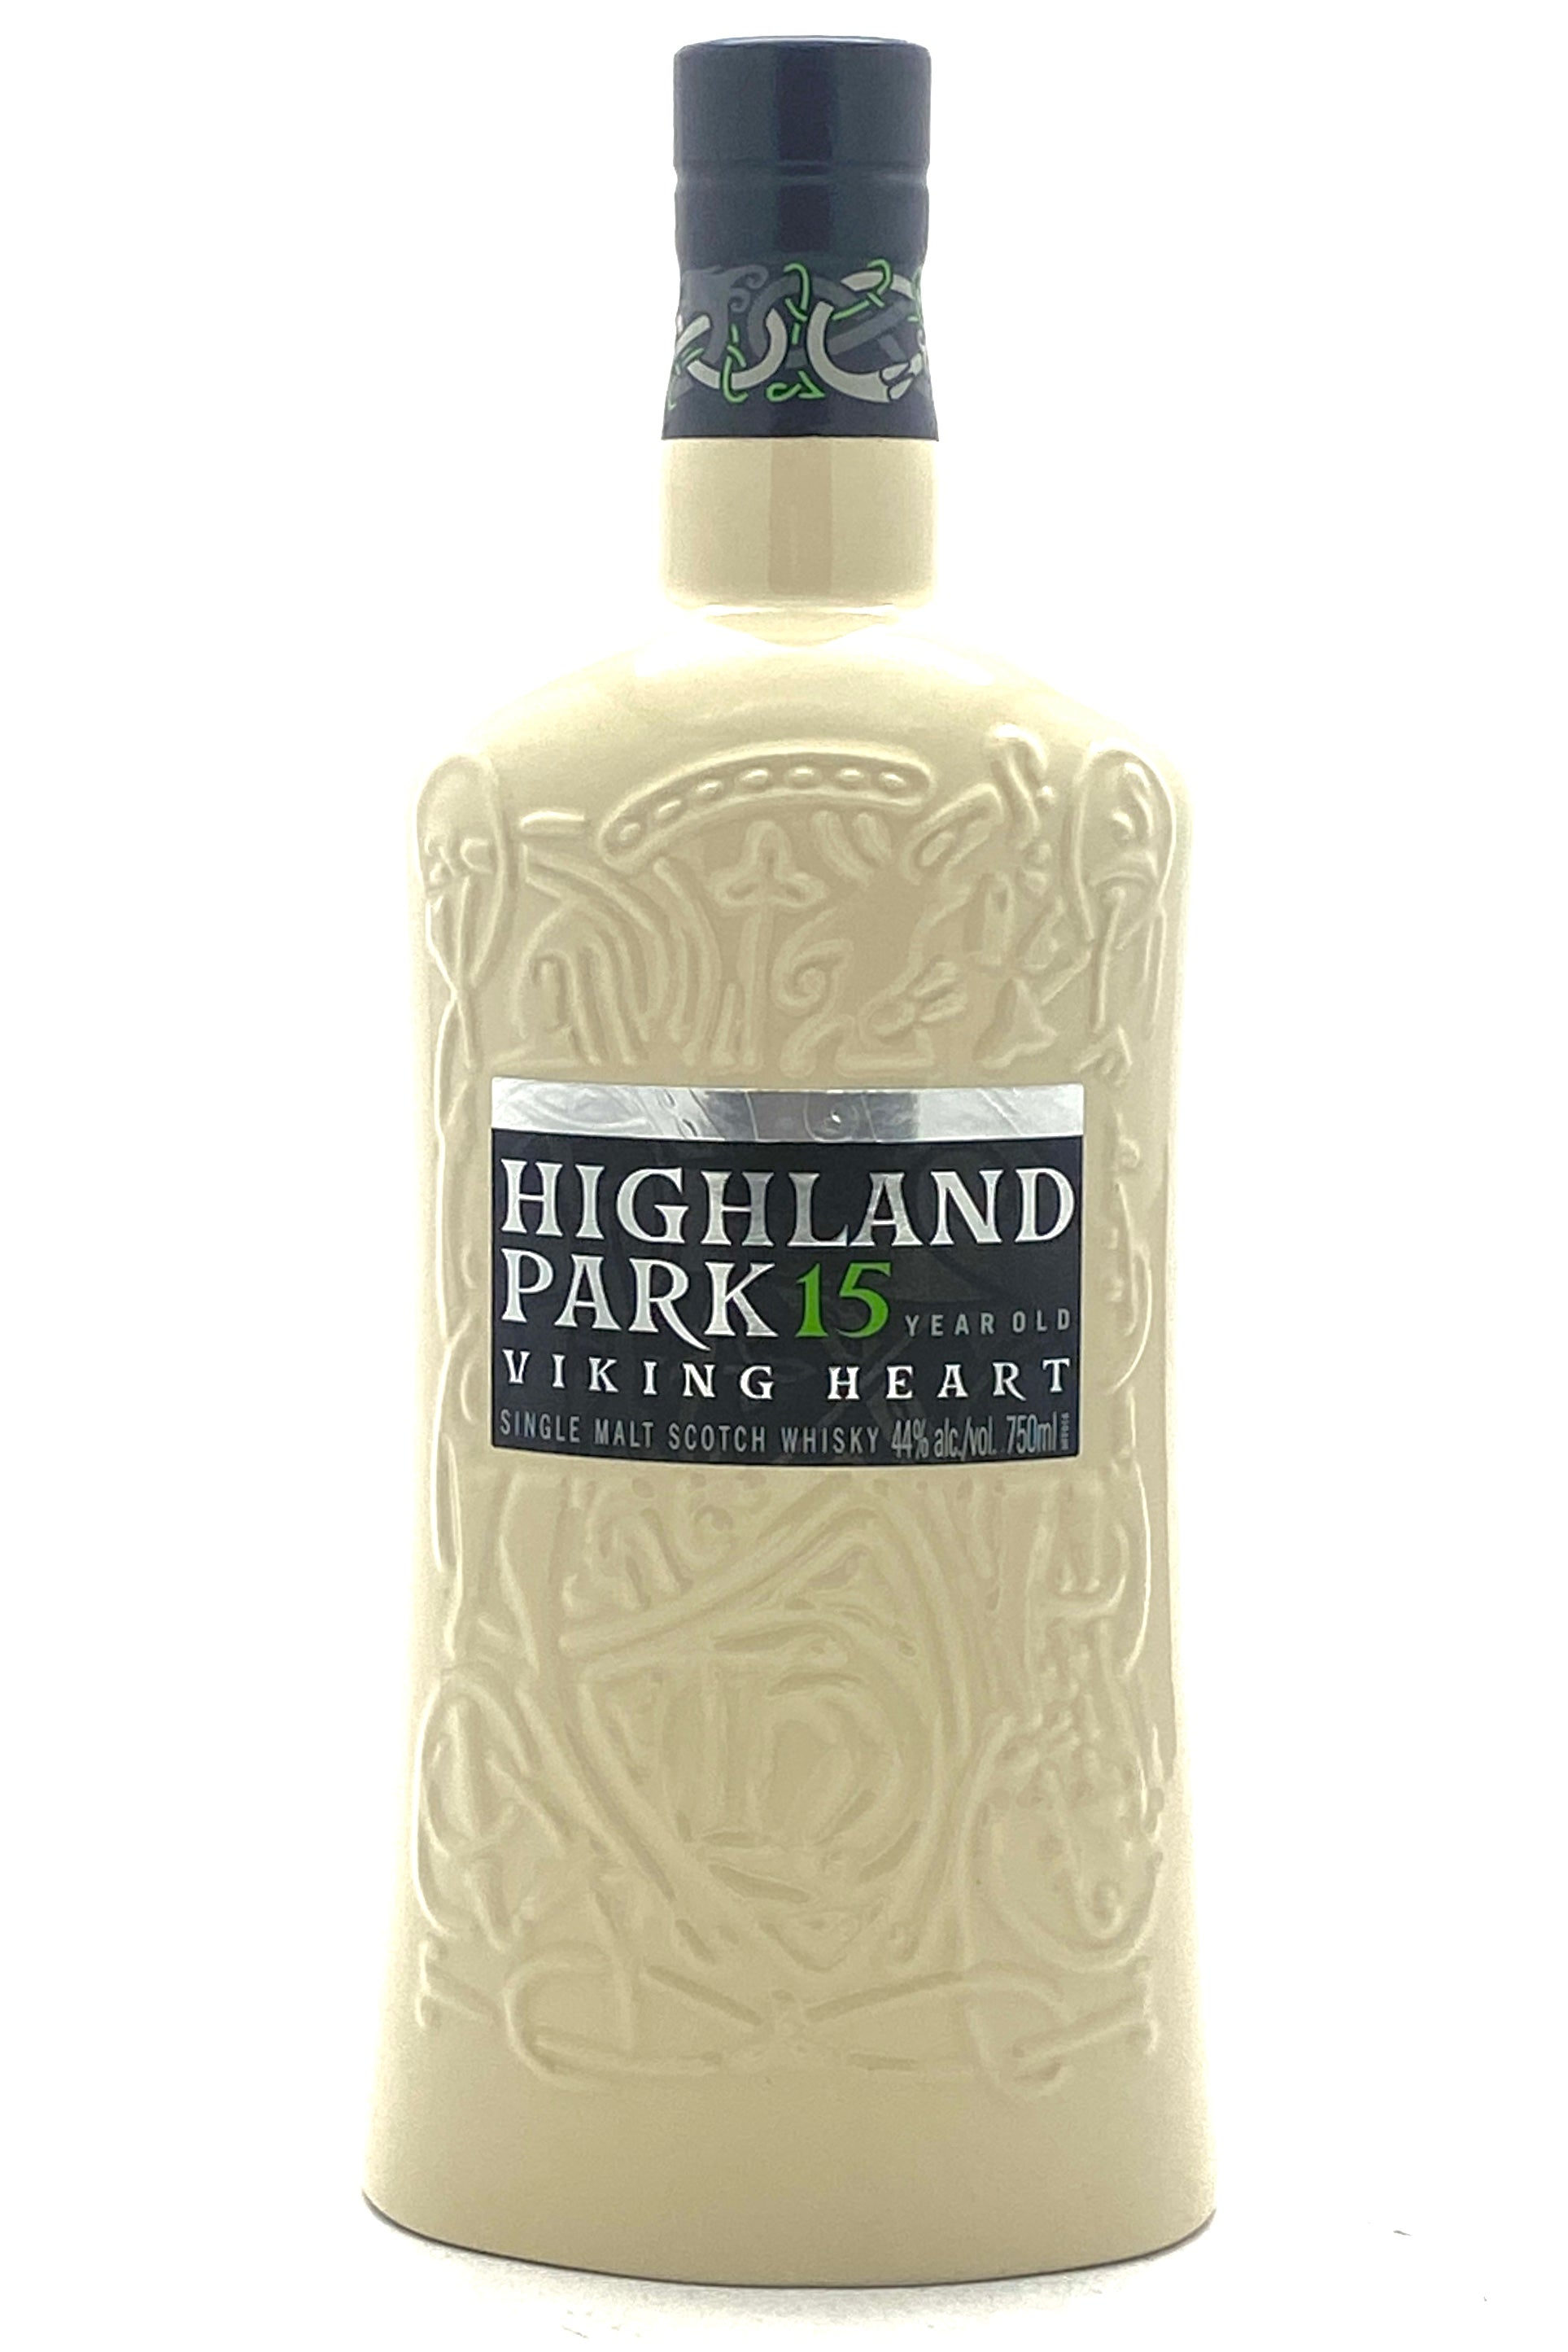 Buy Highland Park 21 YO Online- The Single Malt Shop